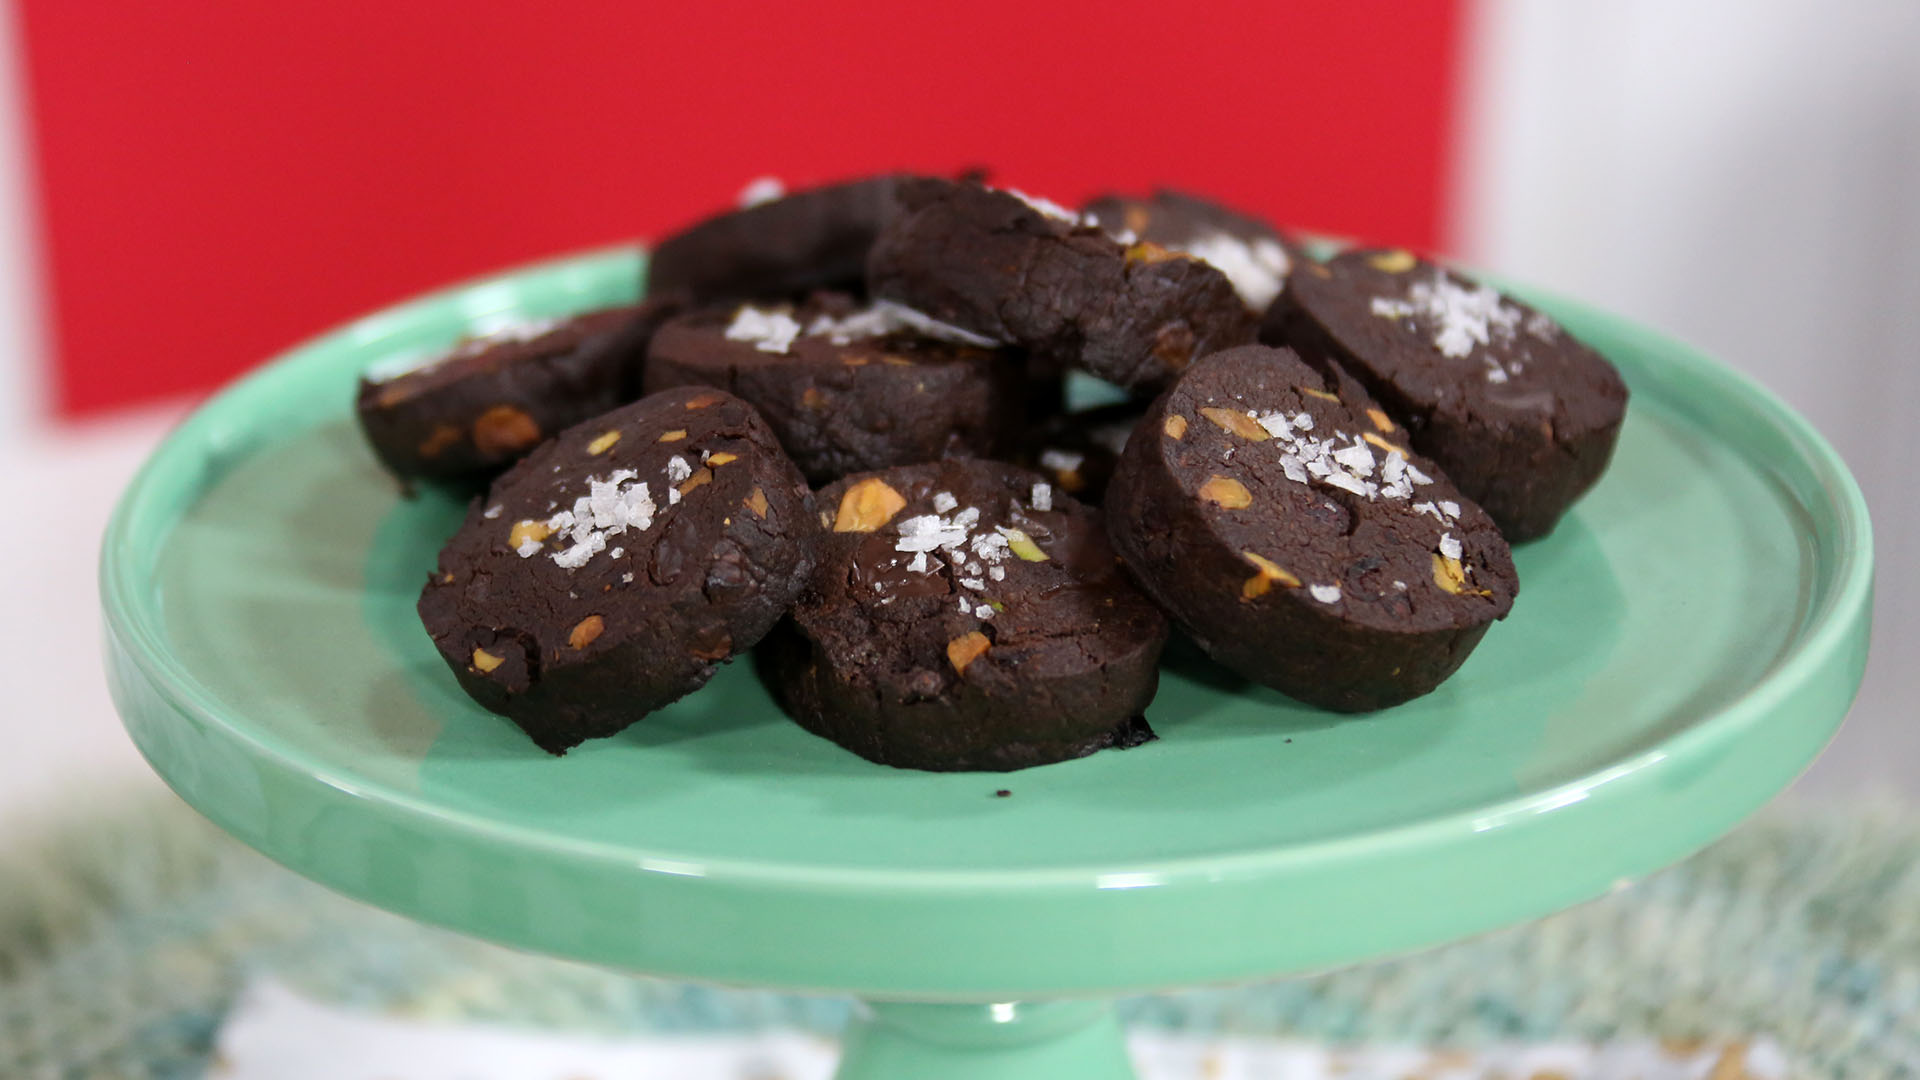 Festive slice and bake chocolate cookies